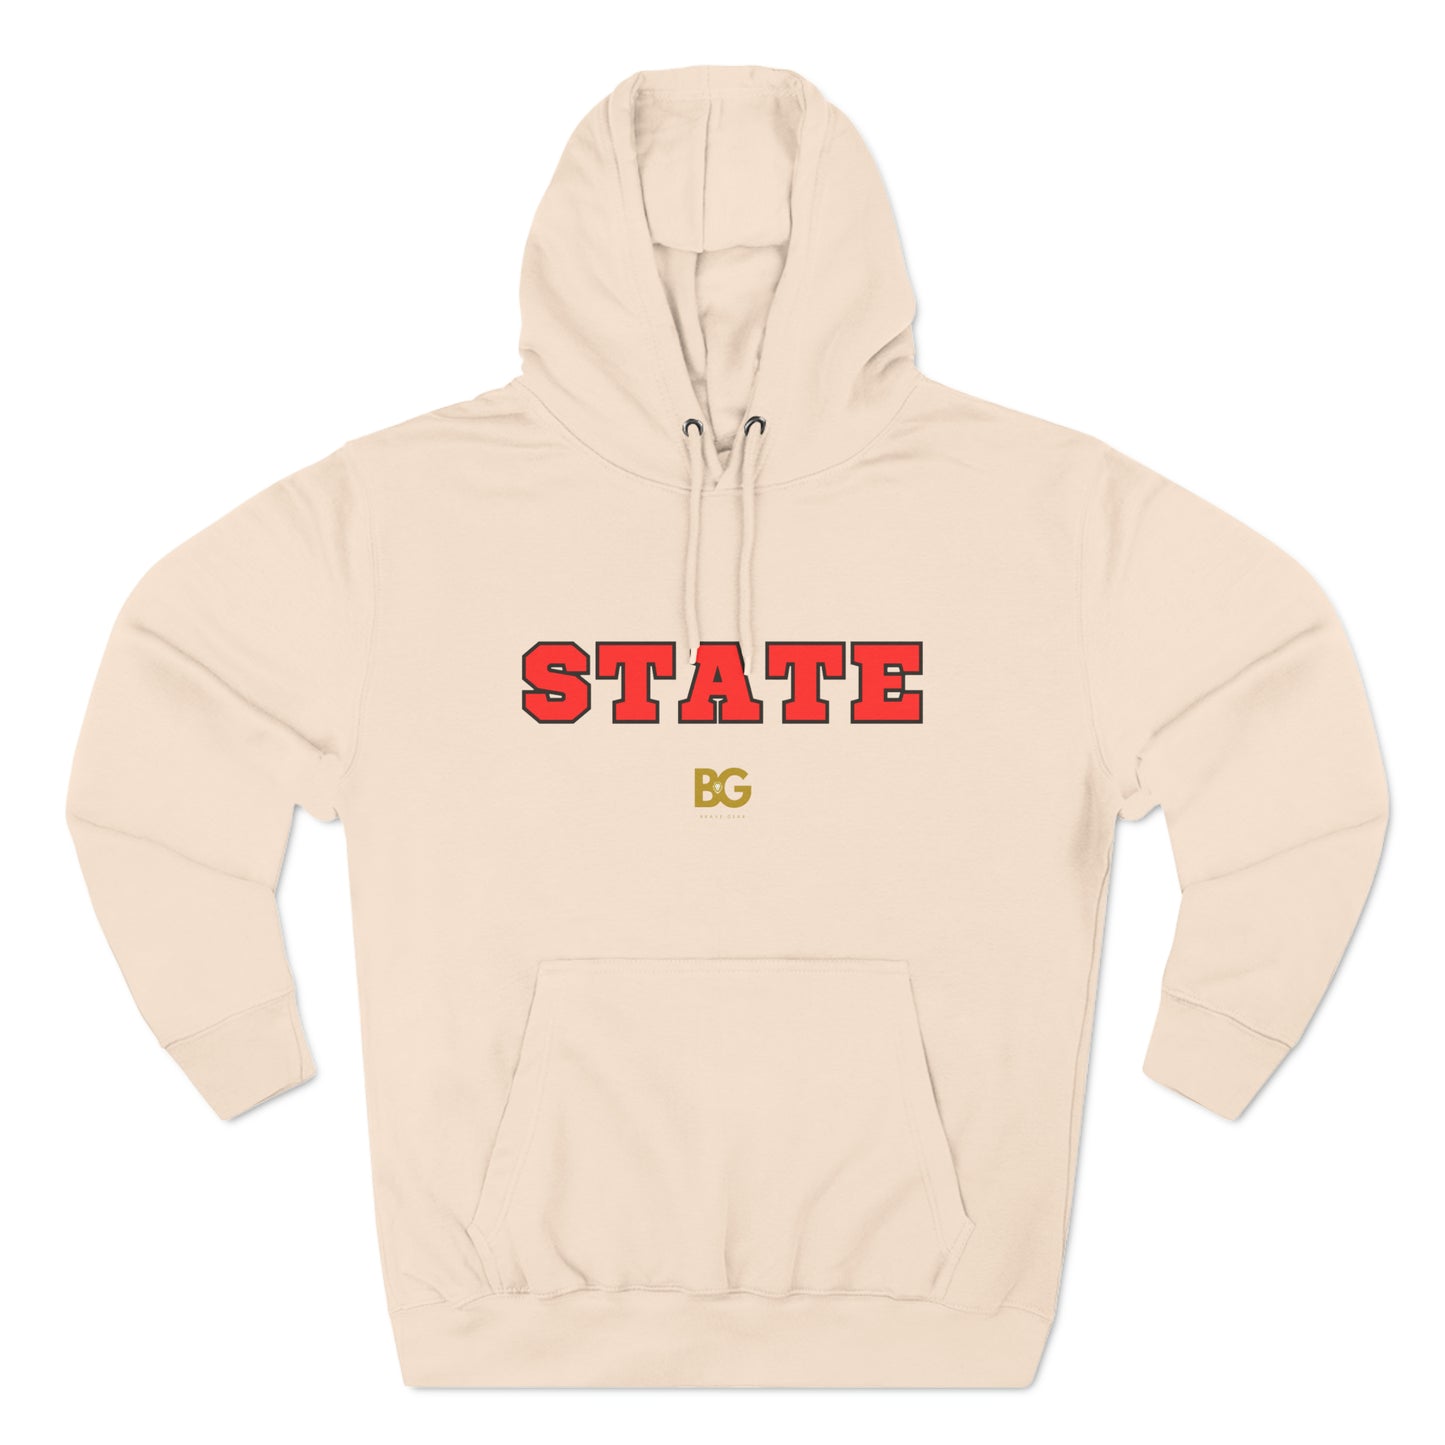 BG "State" Premium Pullover Hoodie